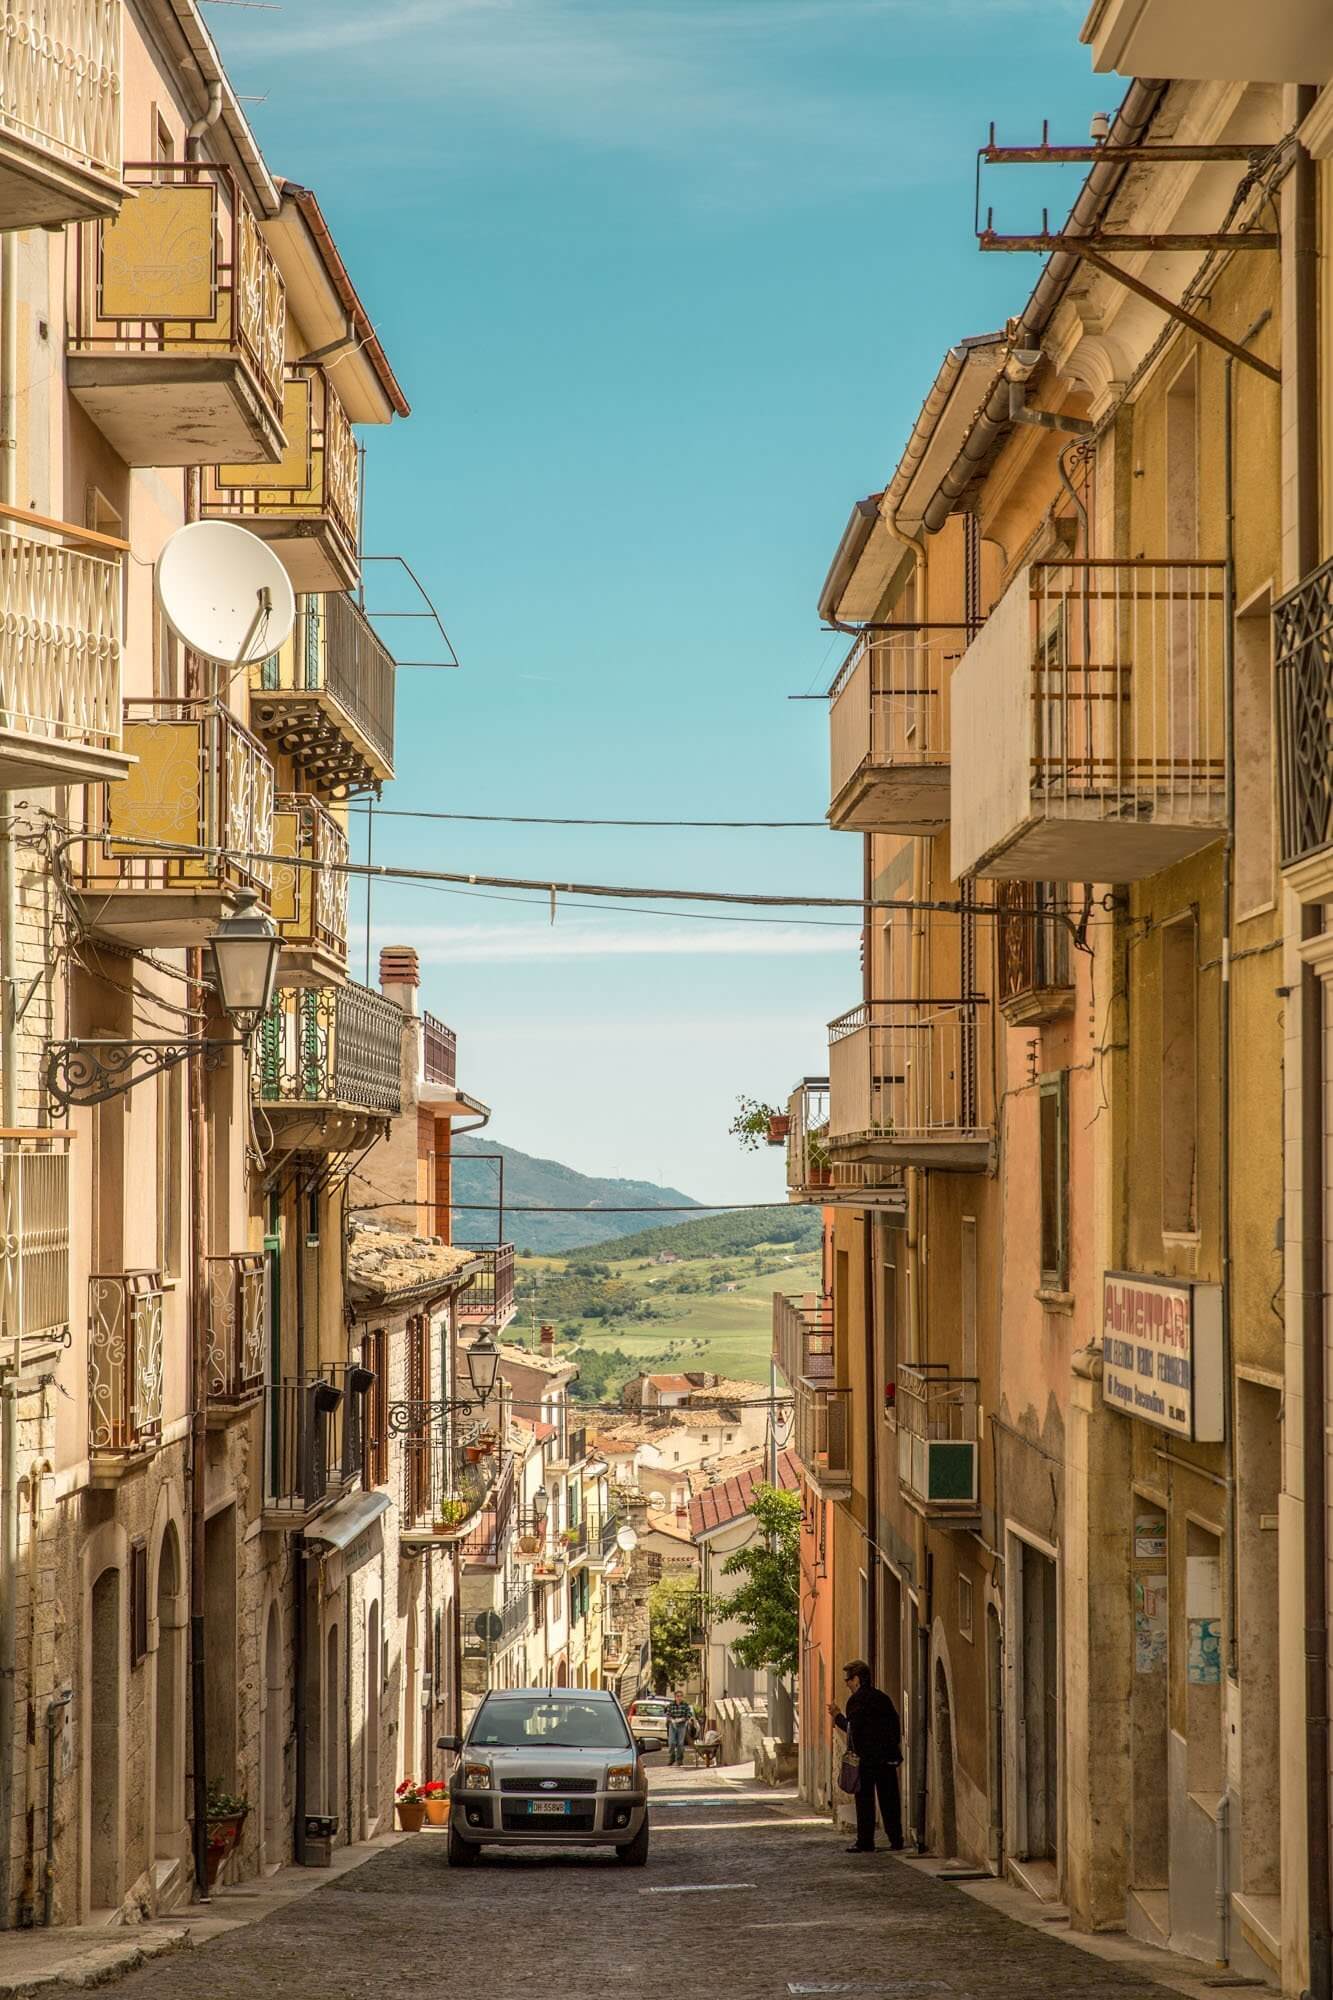 A hilly street in Bagnoli del Trigno, Molise, Italy